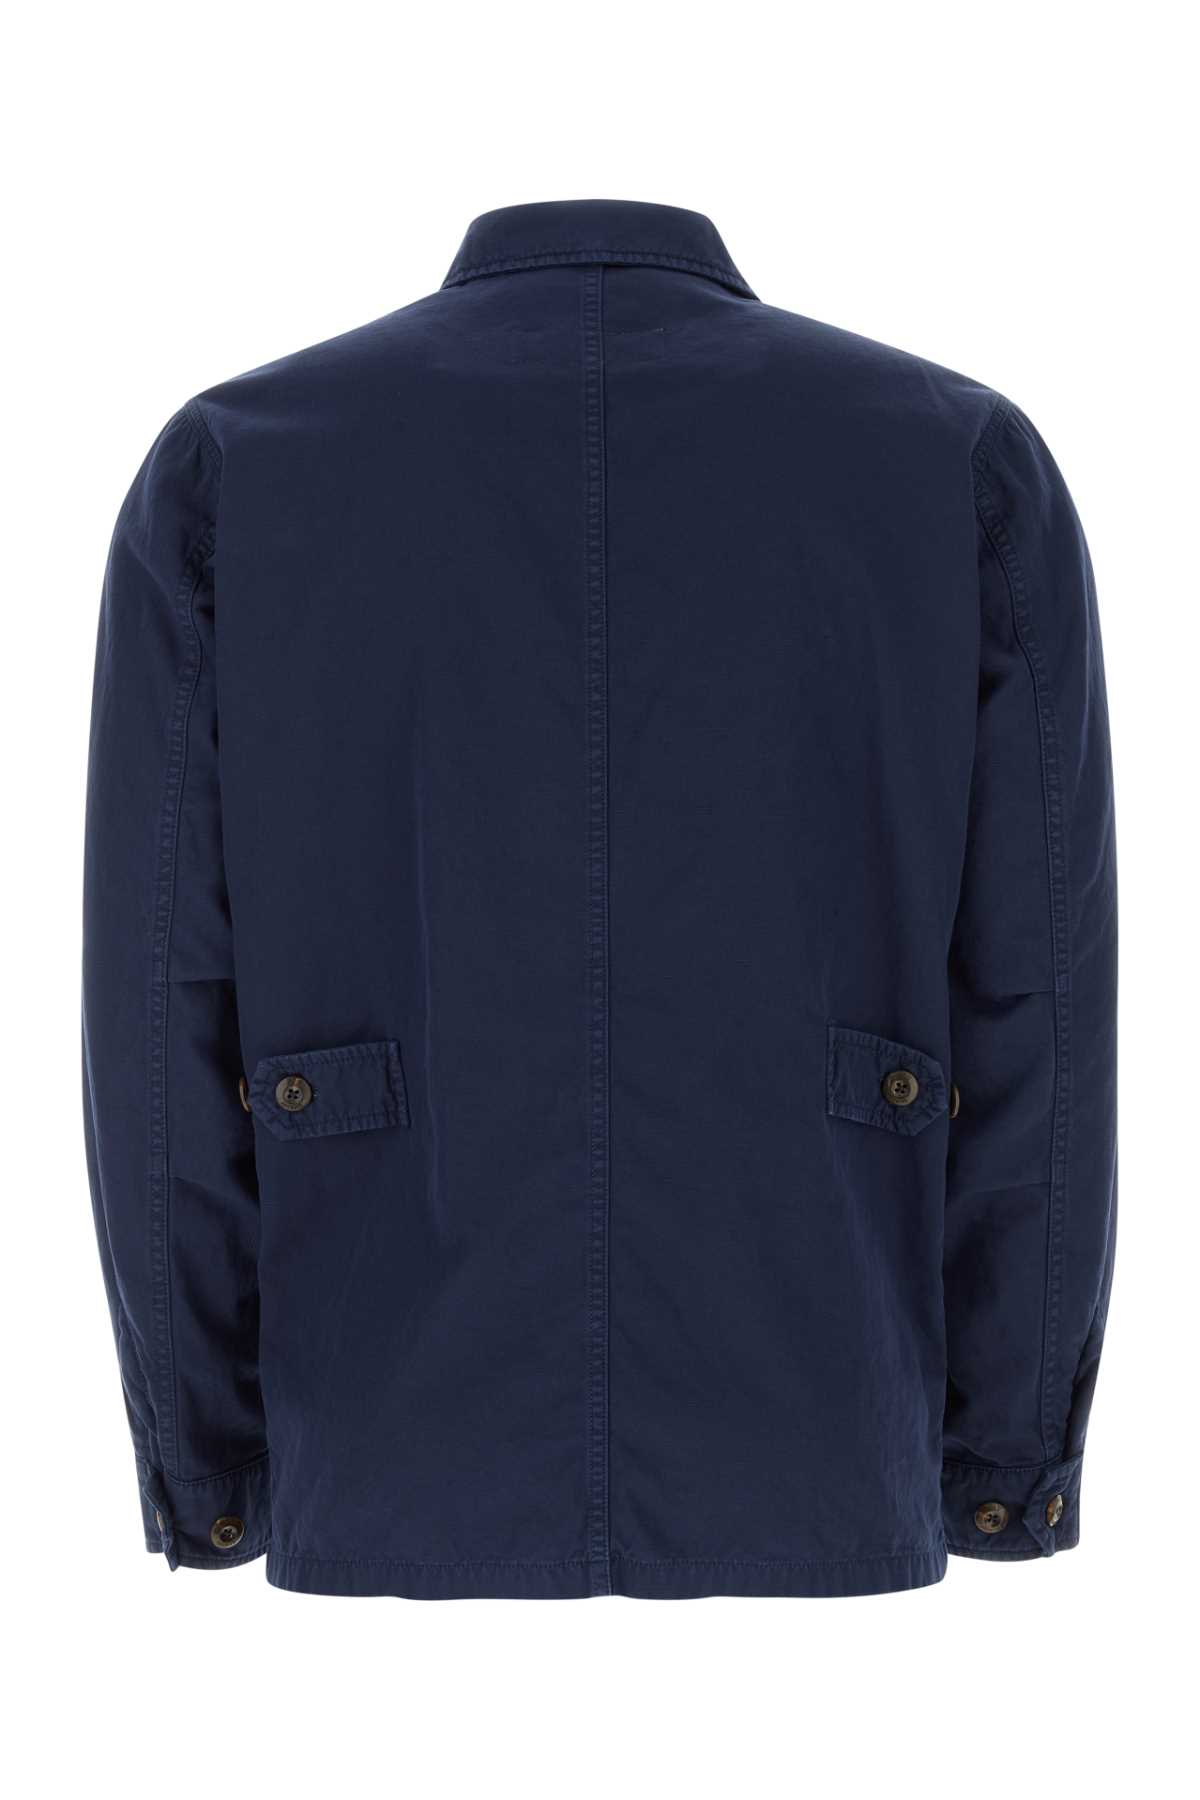 Fay Navy Blue Cotton Blend Jacket In U809